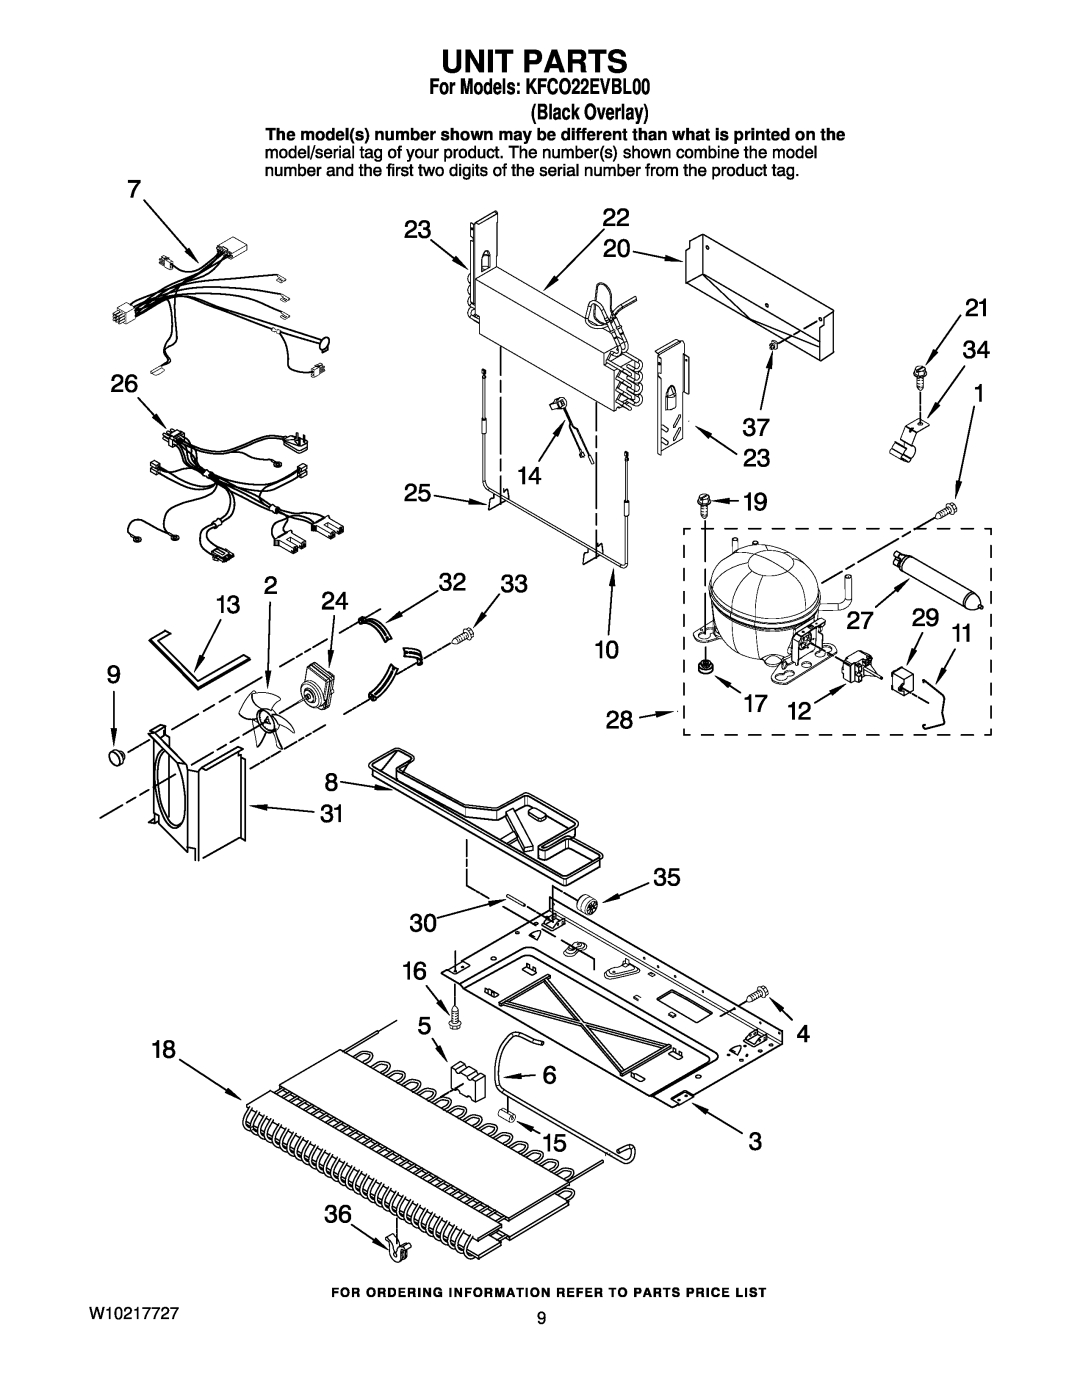 KitchenAid manual Unit Parts, For Models KFCO22EVBL00 Black Overlay 